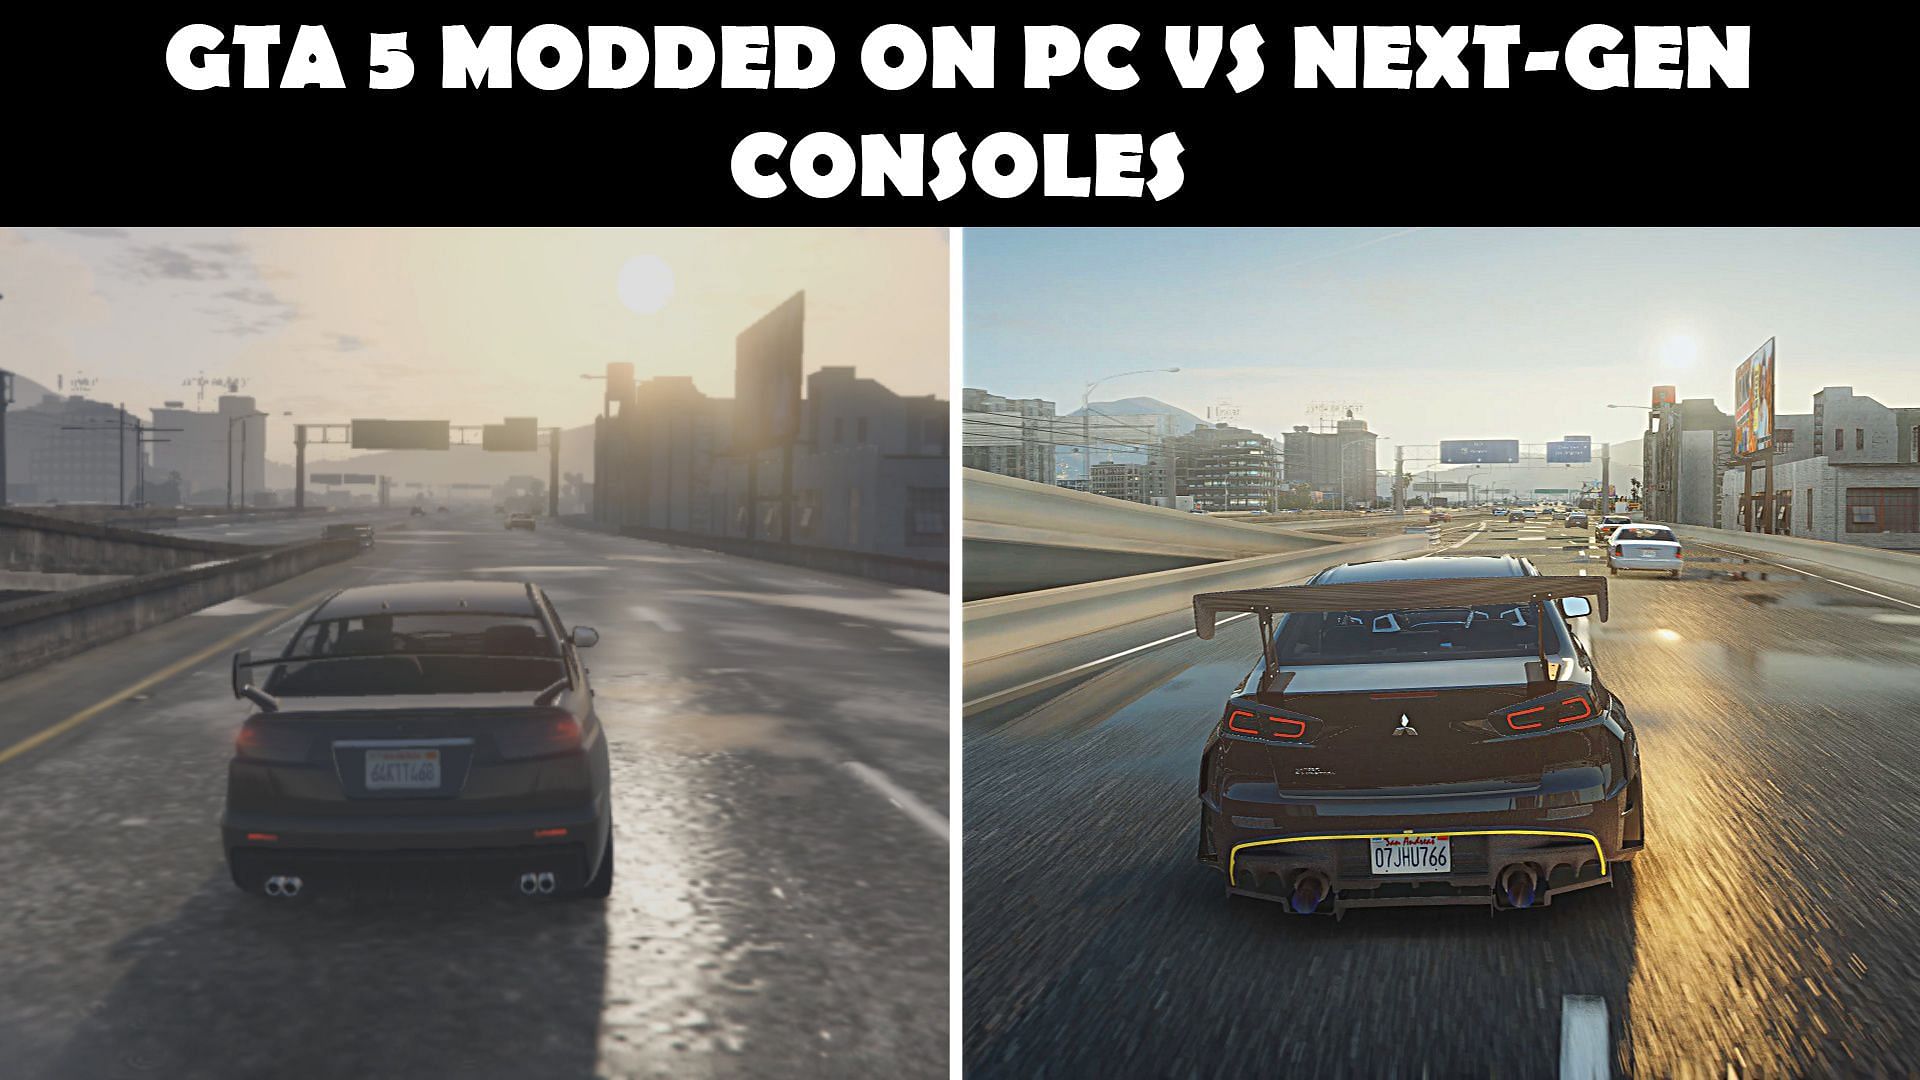 GTA 5 Mods on PC make it a brand new game (Image via Twitter/DubstepZz)